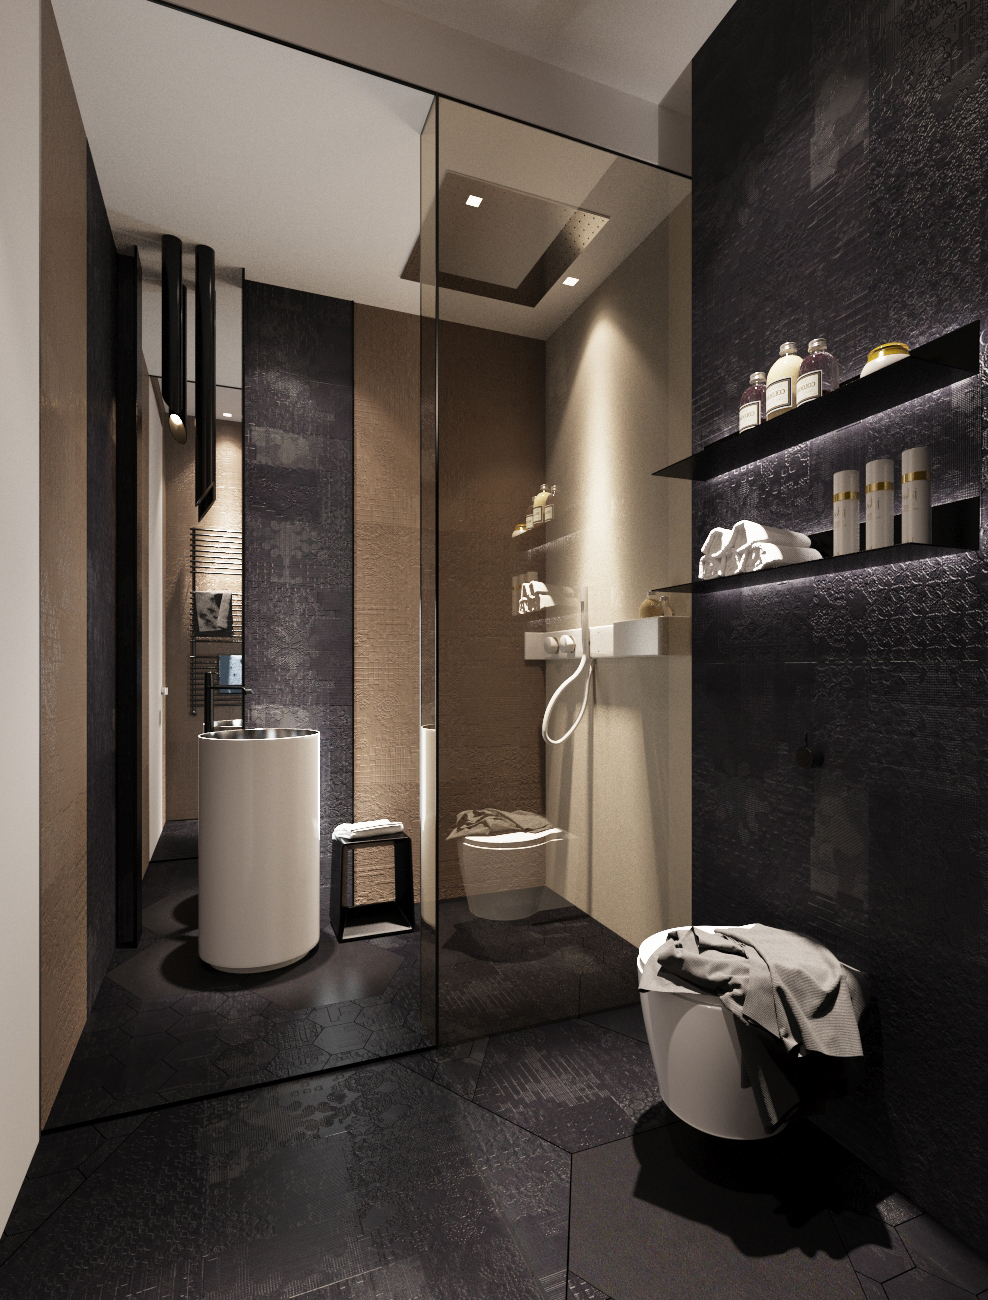 modern dark bathroom backsplash "width =" 988 "height =" 1300 "srcset =" https://mileray.com/wp-content/uploads/2020/05/1588515636_66_Small-Minimalist-Bathroom-Designs-Decorated-With-Variety-of-Modern-Pattern.jpg 988w, https://mileray.com /wp-content/uploads/2016/10/Artem-Trigubchak1-228x300.jpg 228w, https://mileray.com/wp-content/uploads/2016/10/Artem-Trigubchak1-768x1011.jpg 768w, https: / /mileray.com/wp-content/uploads/2016/10/Artem-Trigubchak1-778x1024.jpg 778w, https://mileray.com/wp-content/uploads/2016/10/Artem-Trigubchak1-696x916.jpg 696w , https://mileray.com/wp-content/uploads/2016/10/Artem-Trigubchak1-319x420.jpg 319w "Sizes =" (maximum width: 988px) 100vw, 988px